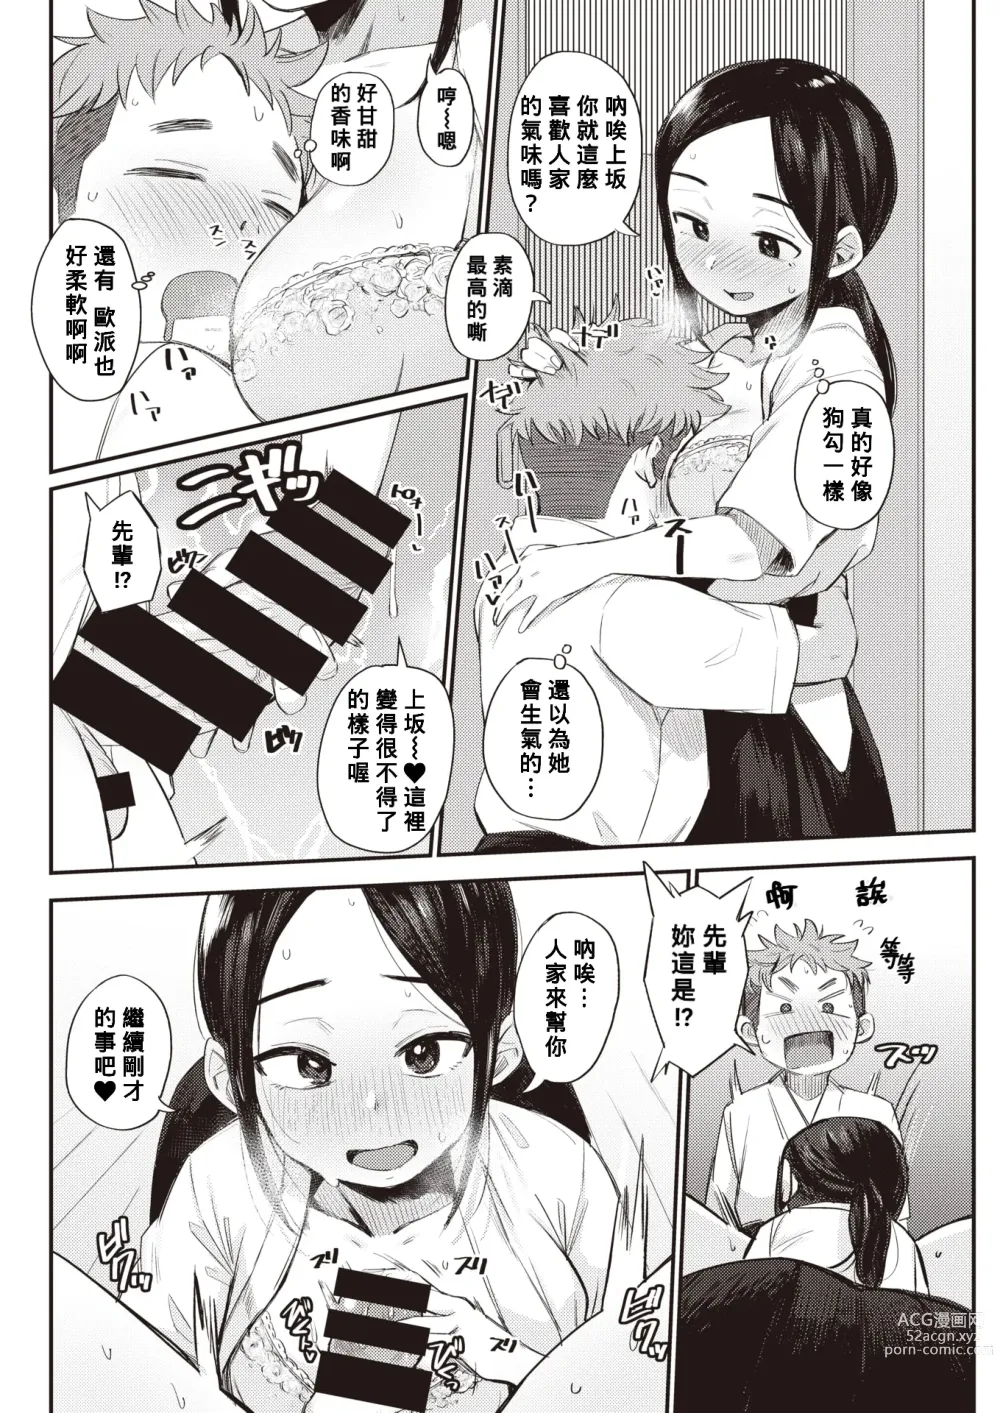 Page 6 of manga Koi no Nioi♡